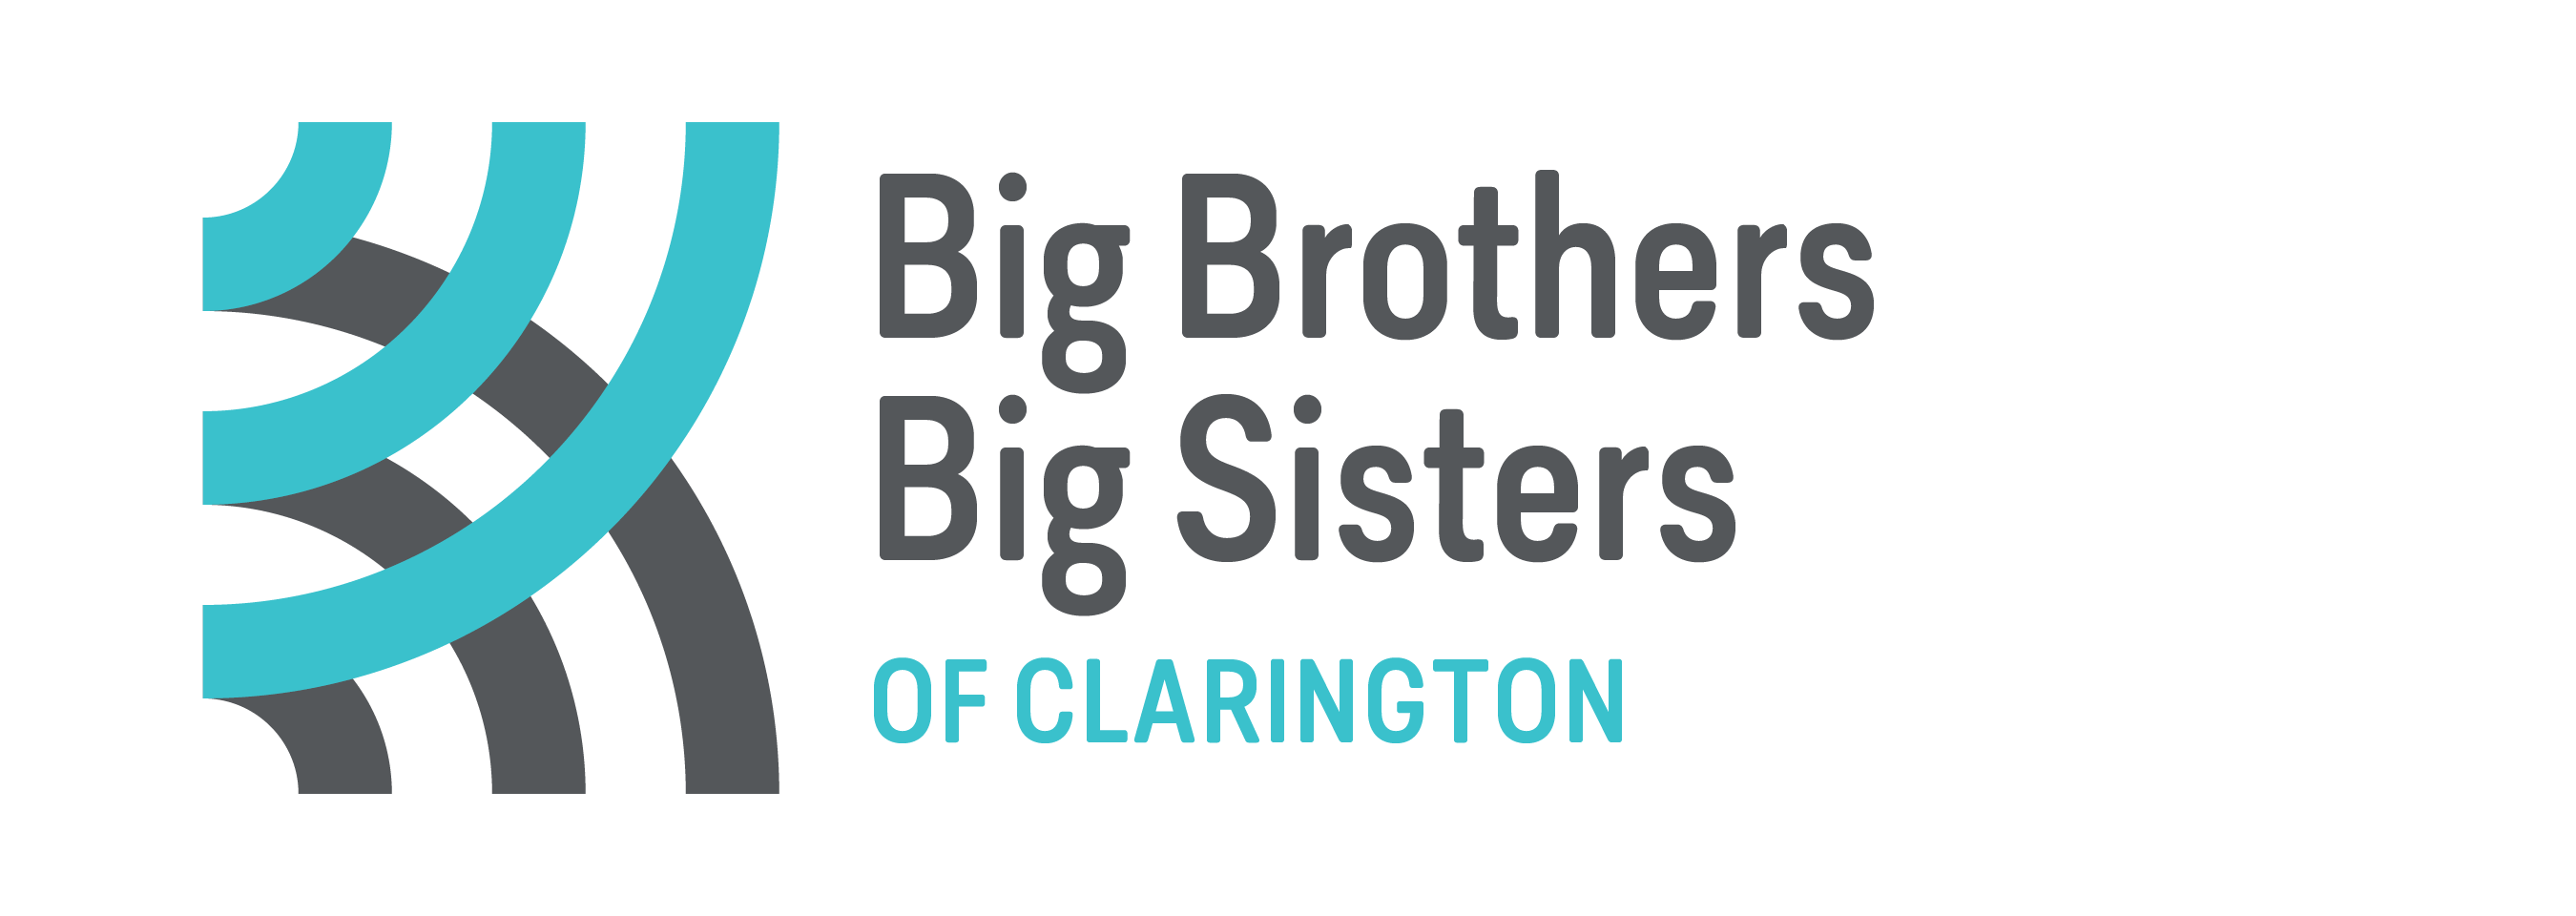 Big Brothers Big Sisters of Clarington logo